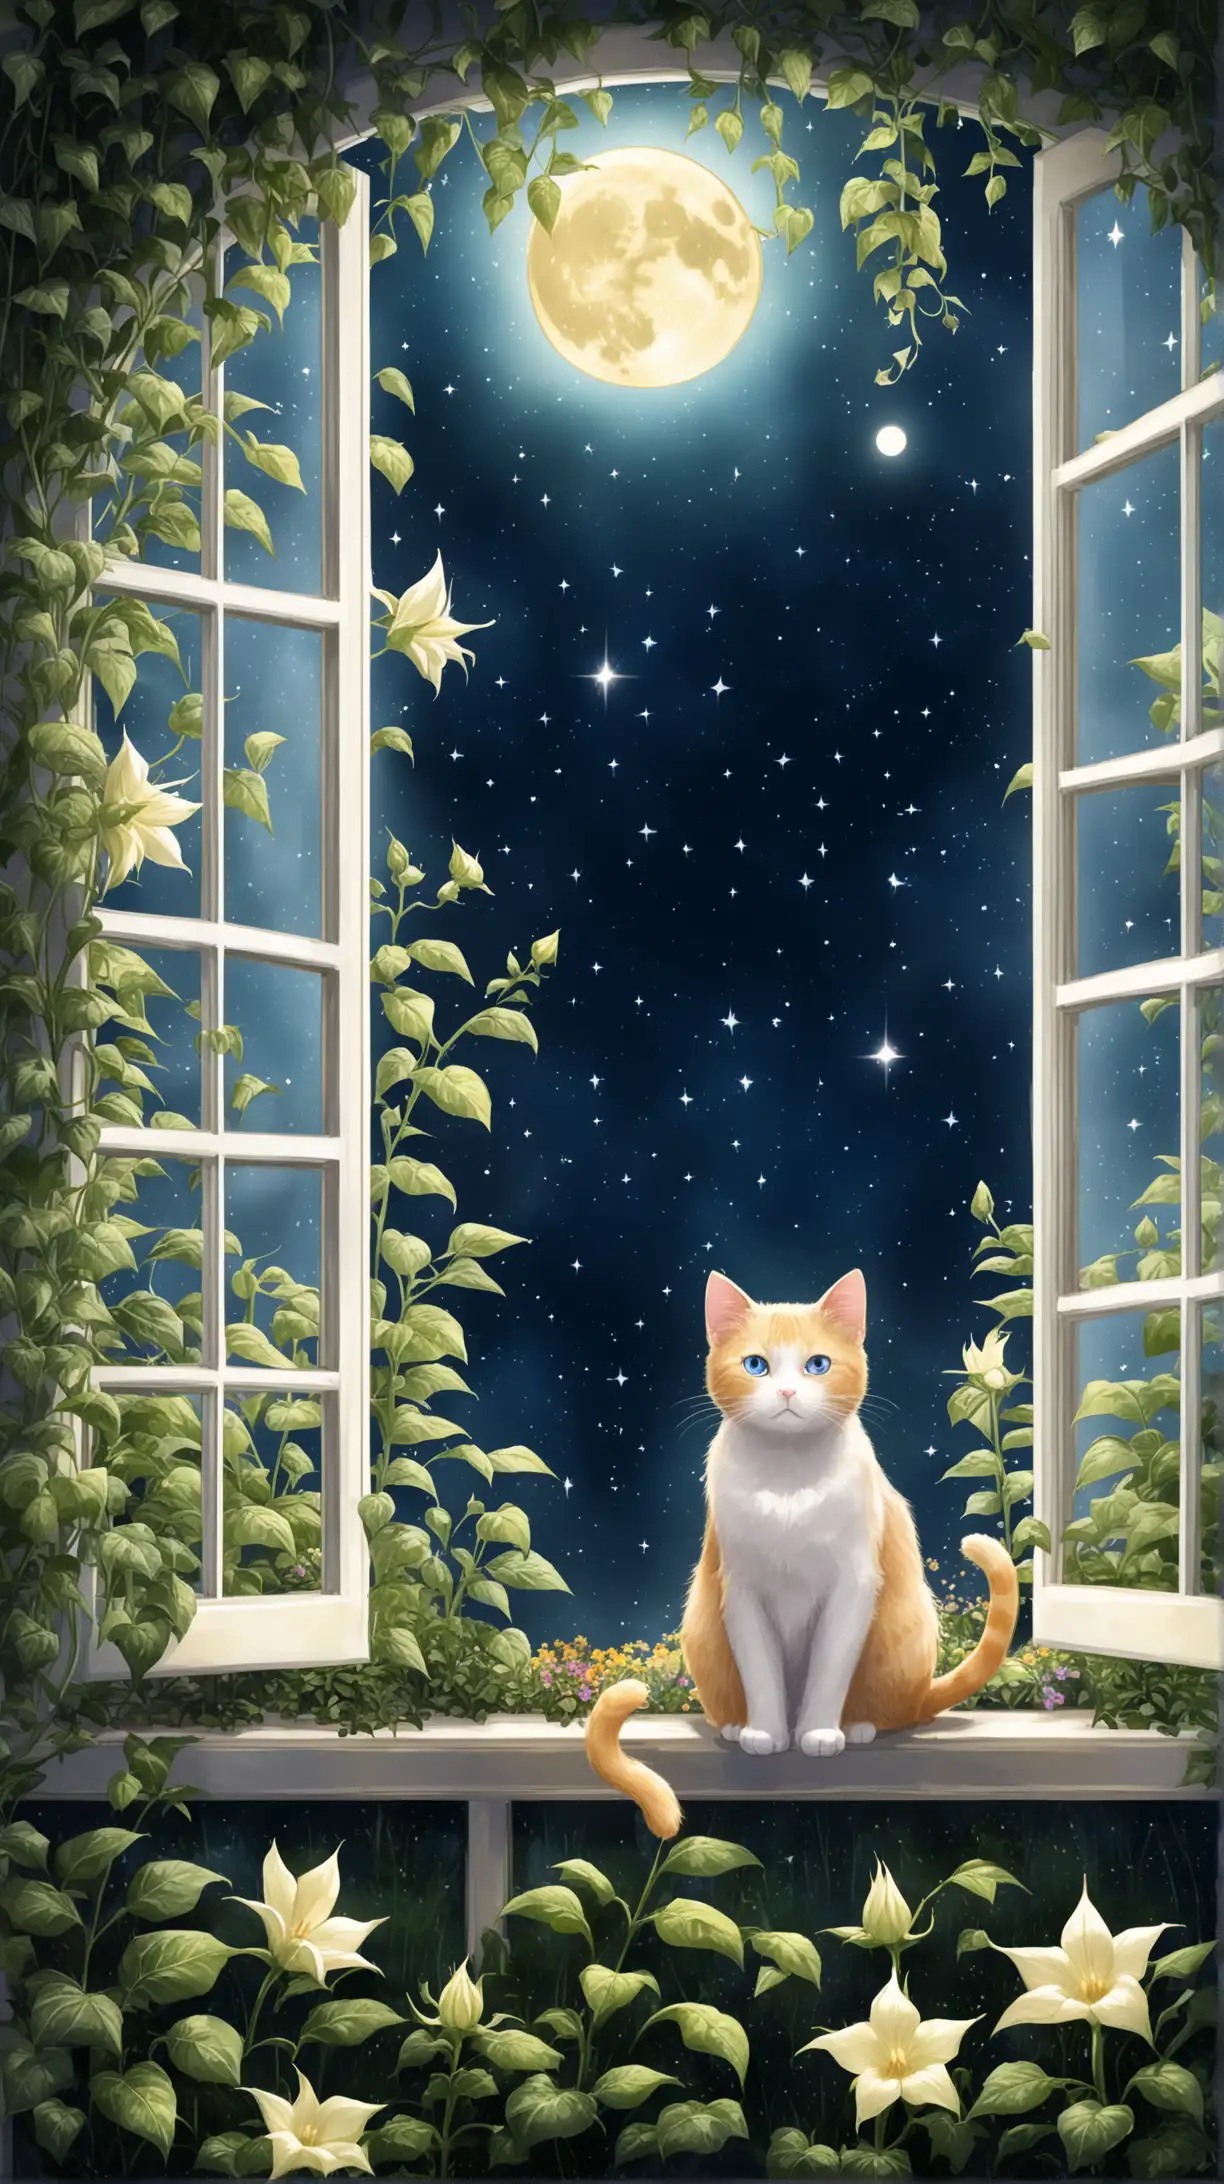 Cat Staring at Magical Moonbeams in Moonflower Garden